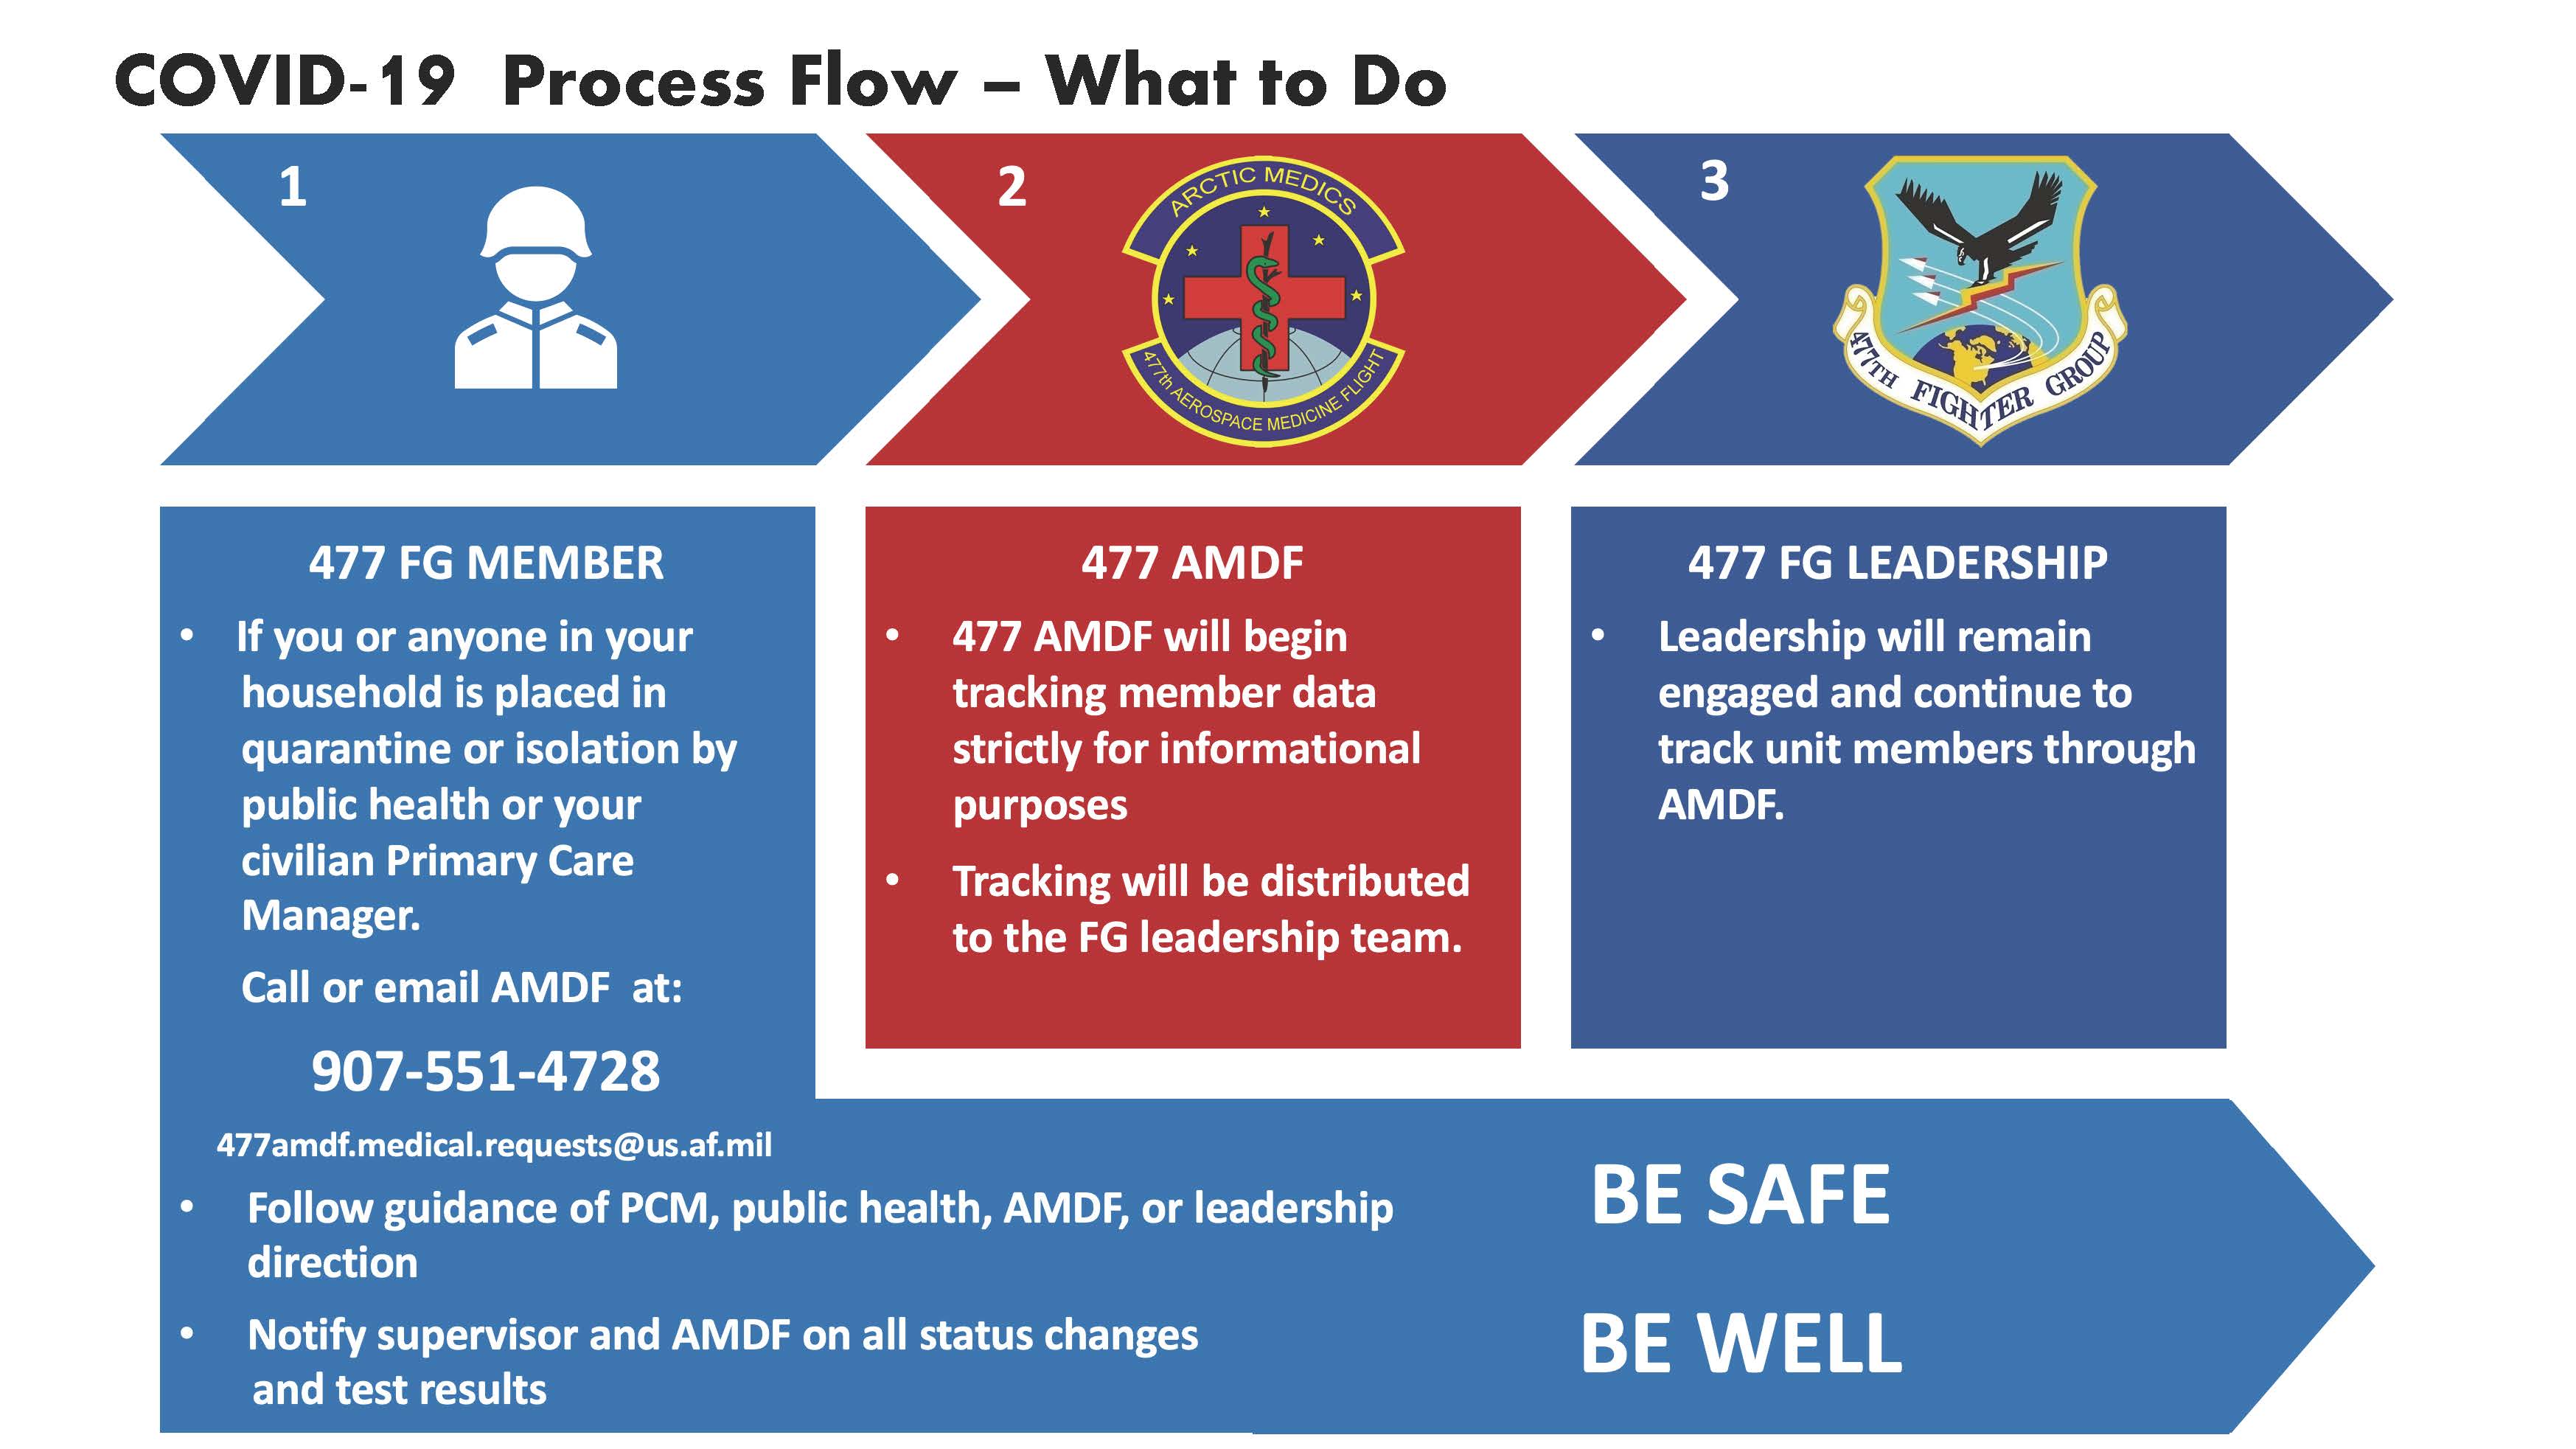 COVID-19 Process Flow Chart